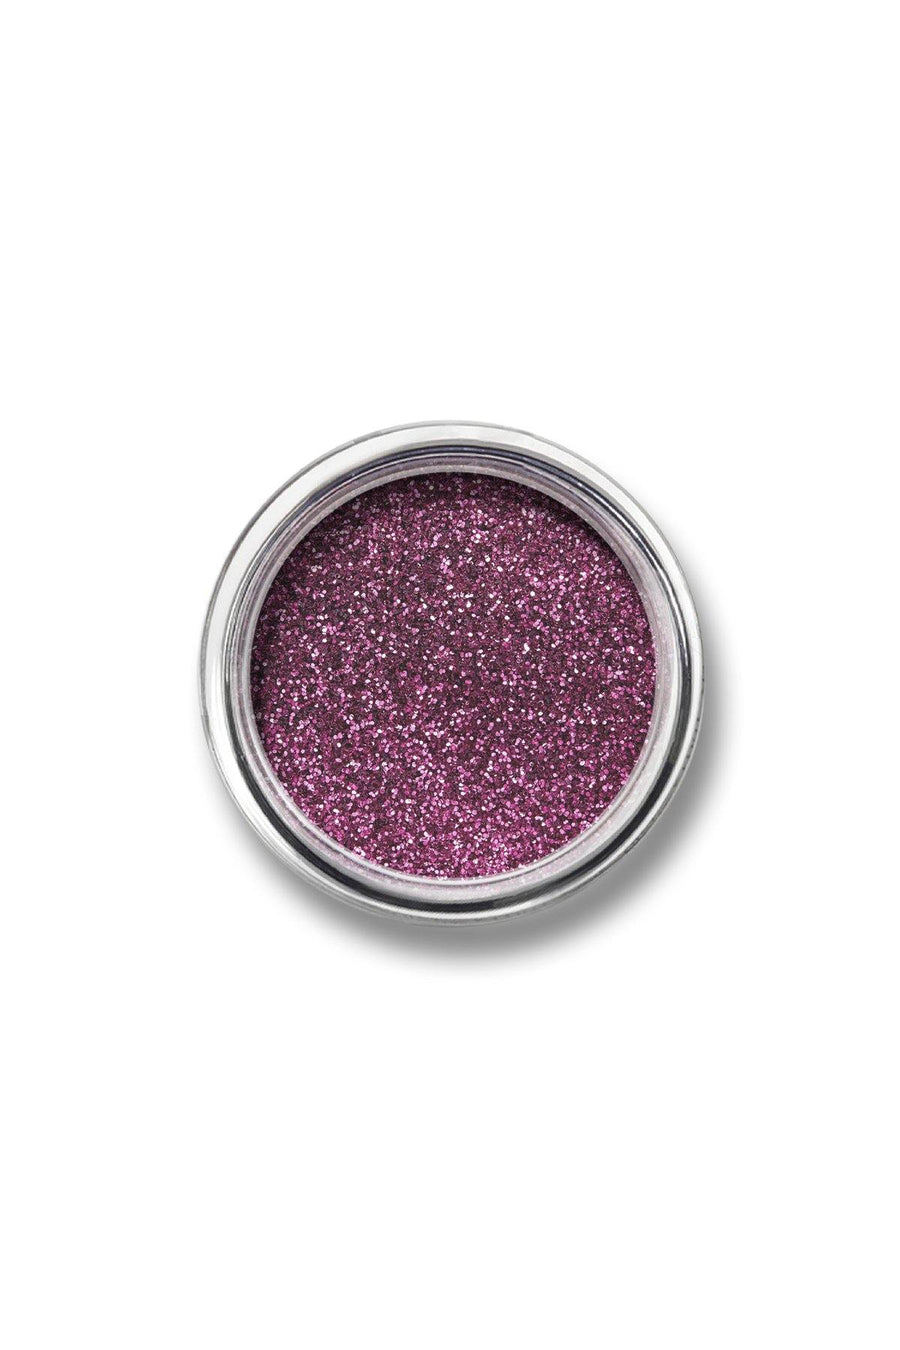 Glitter Powder #12 - Rose Purple - Blend Mineral Cosmetics